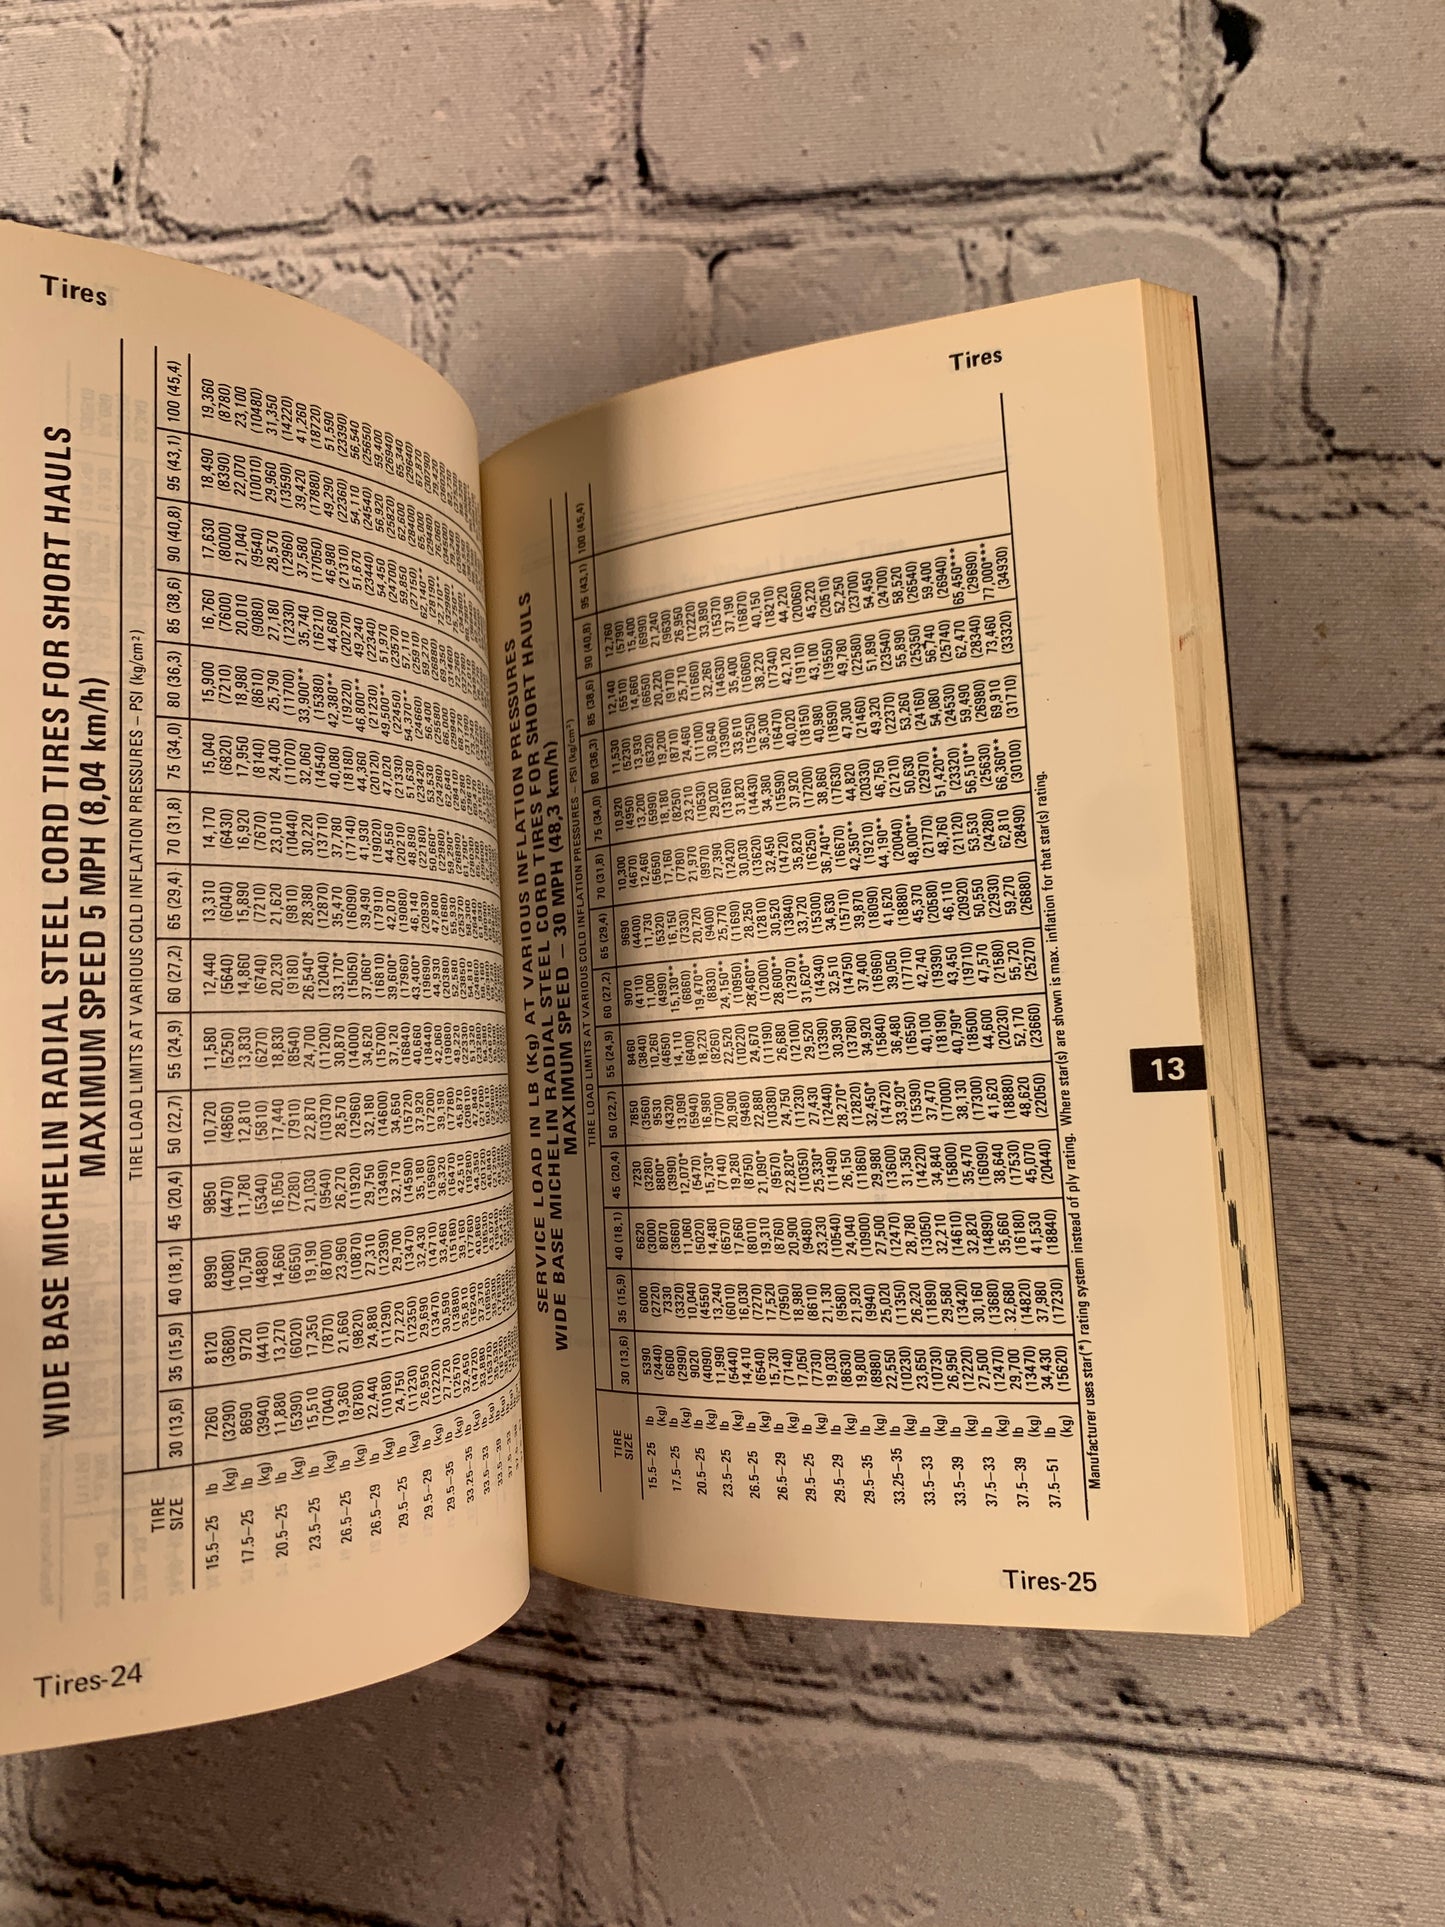 Caterpillar Performance Handbook Edition 1 [1970]